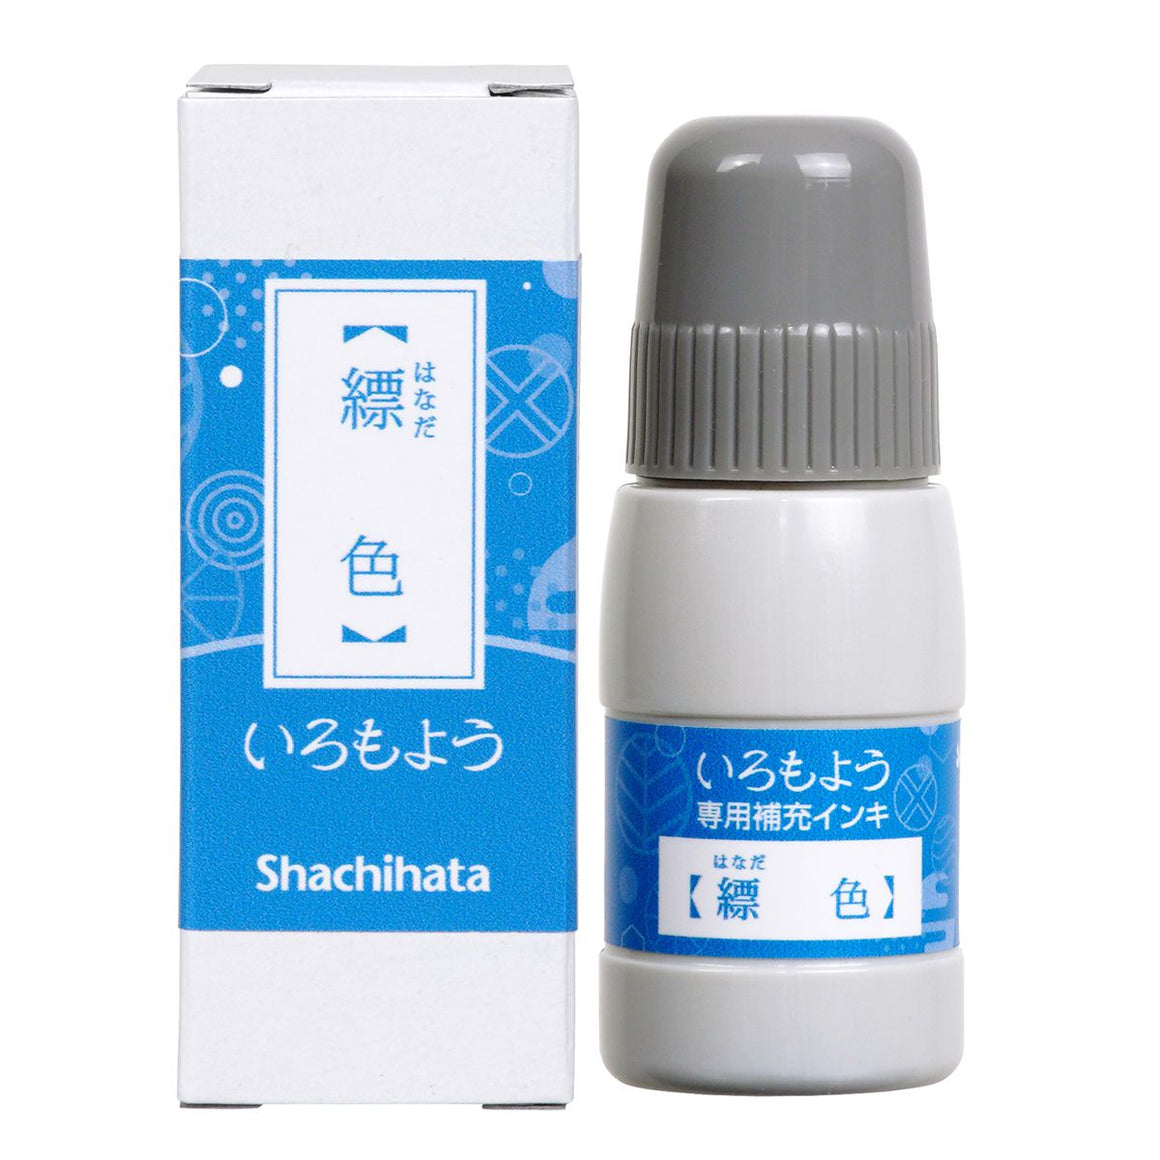 REFILL: Shachihata Iromoyo Ink Refill Bottle - Hanada - Hanadairo 縹色 - SAC-20-CB